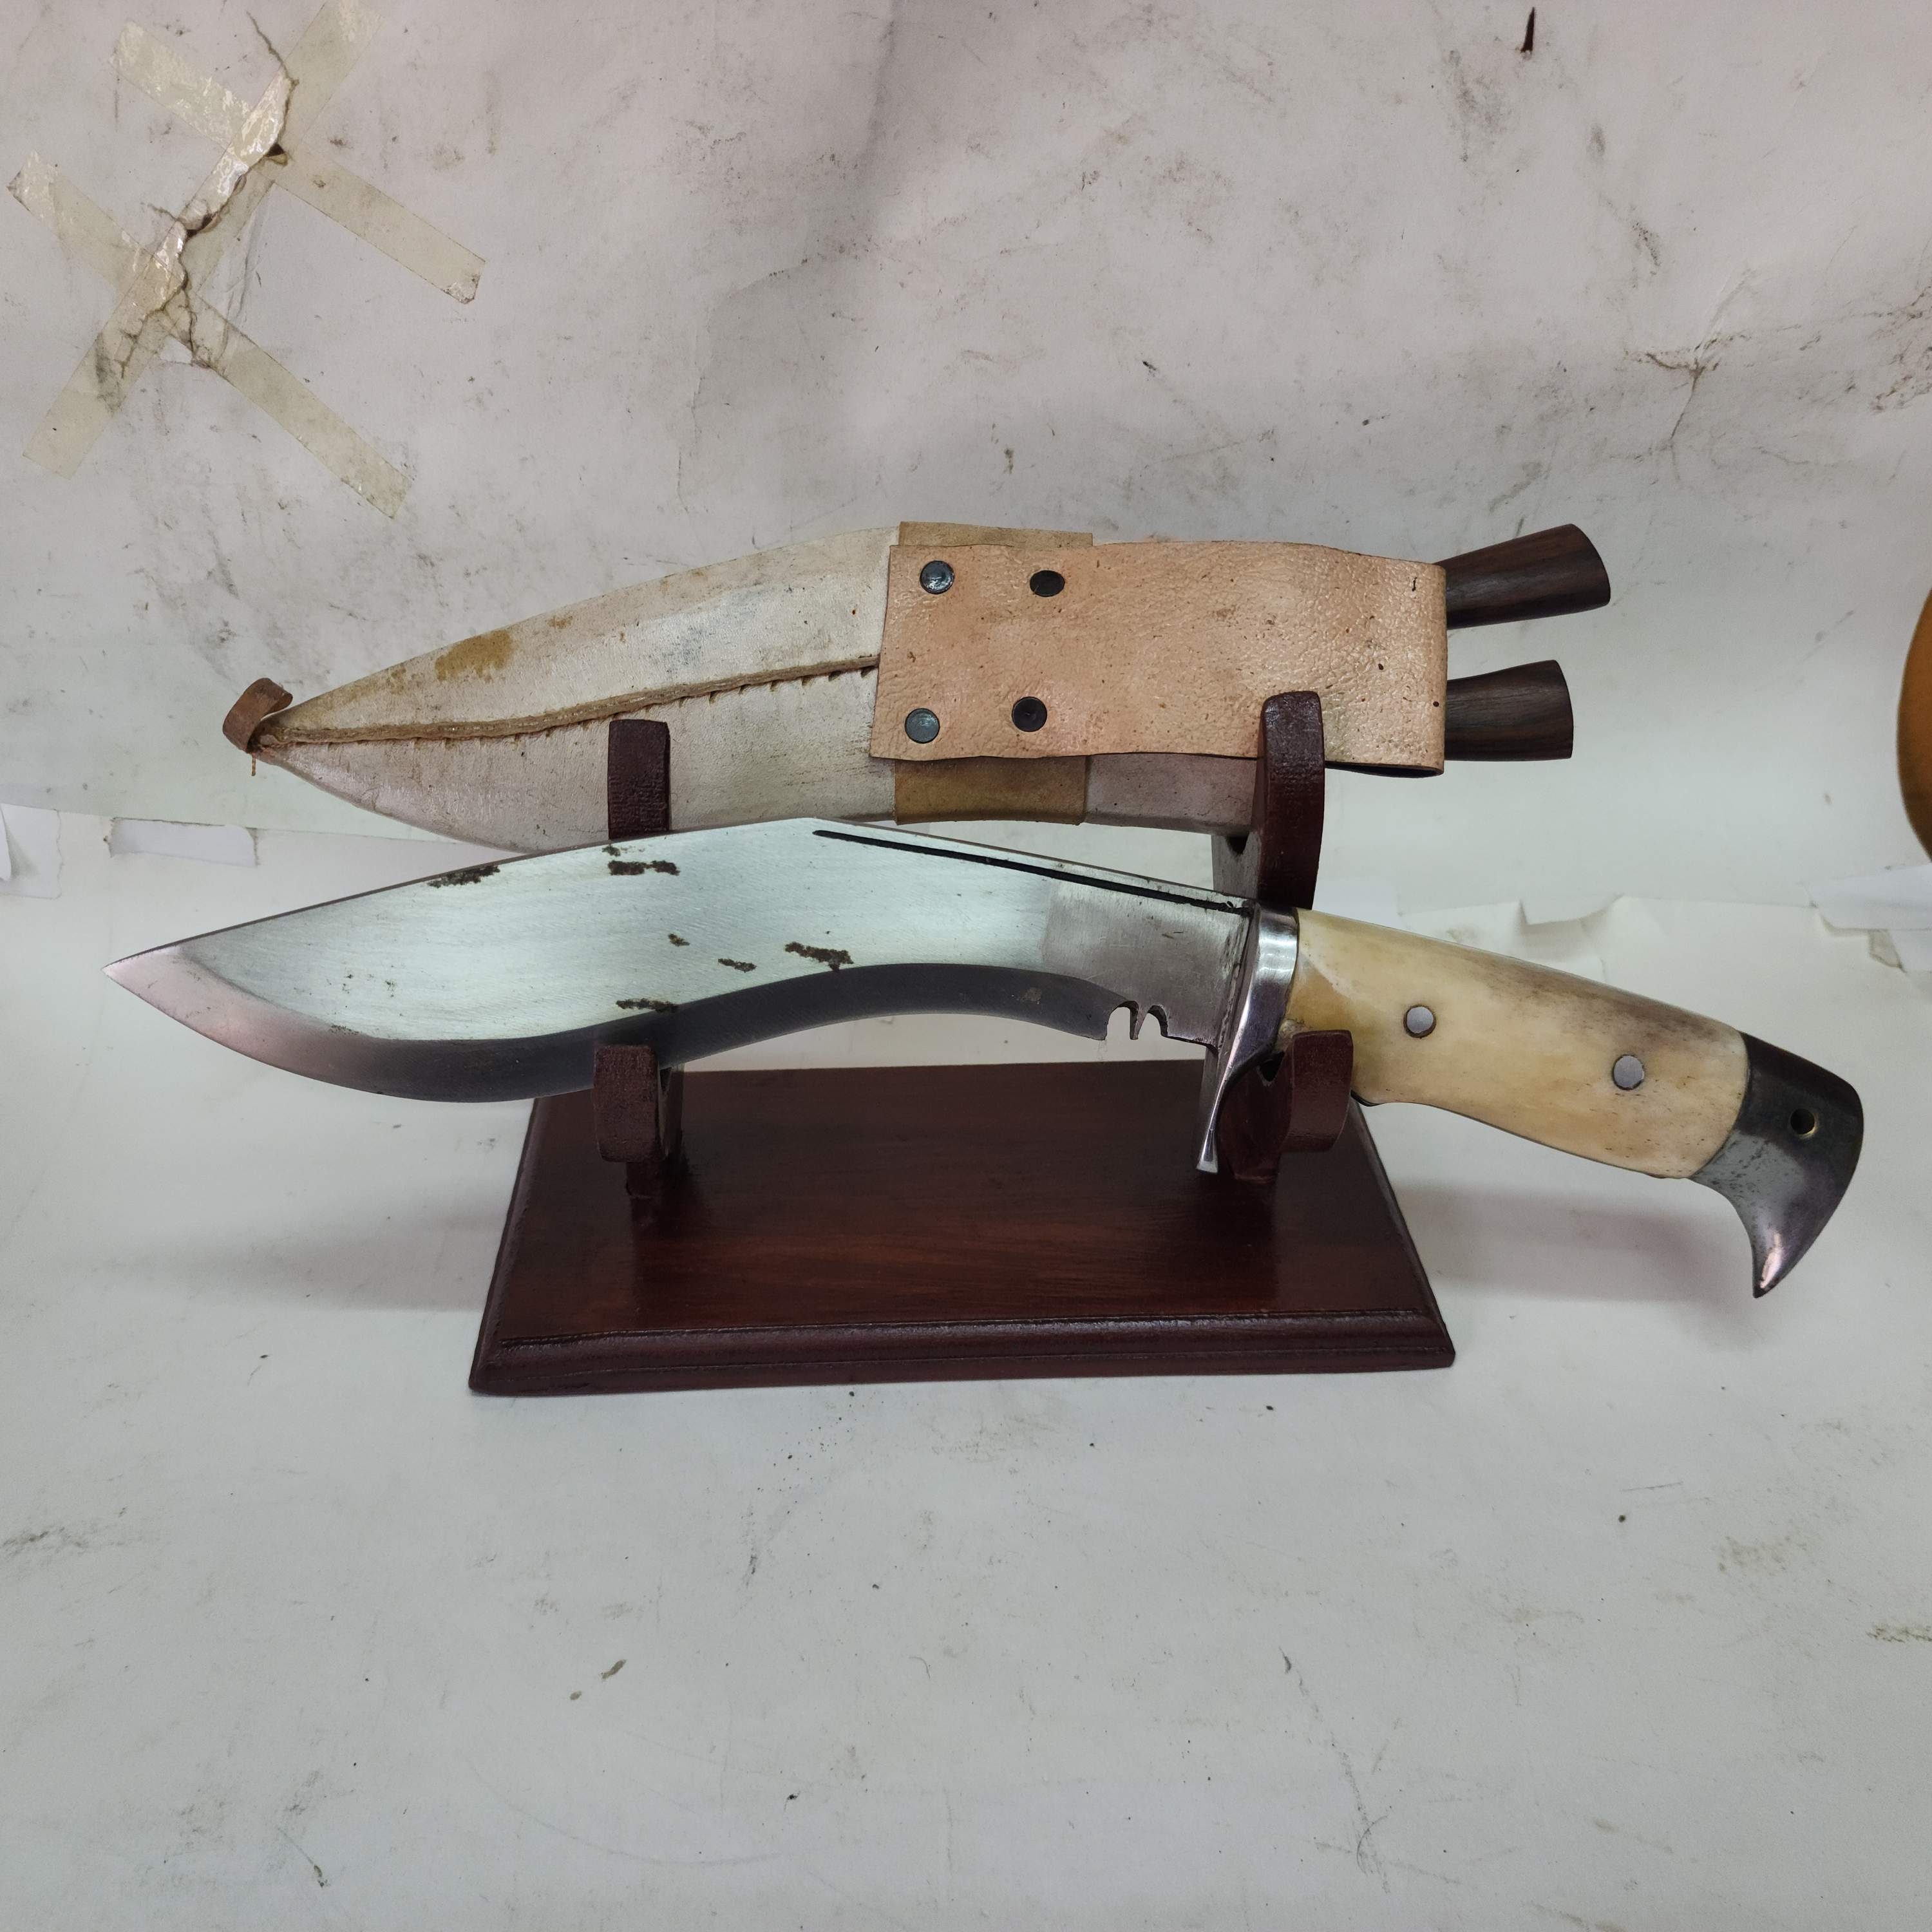 8 Inch, khukuri, Gurkha Knife With Leather Cover And Stand, Nepali Machete, bone Handle